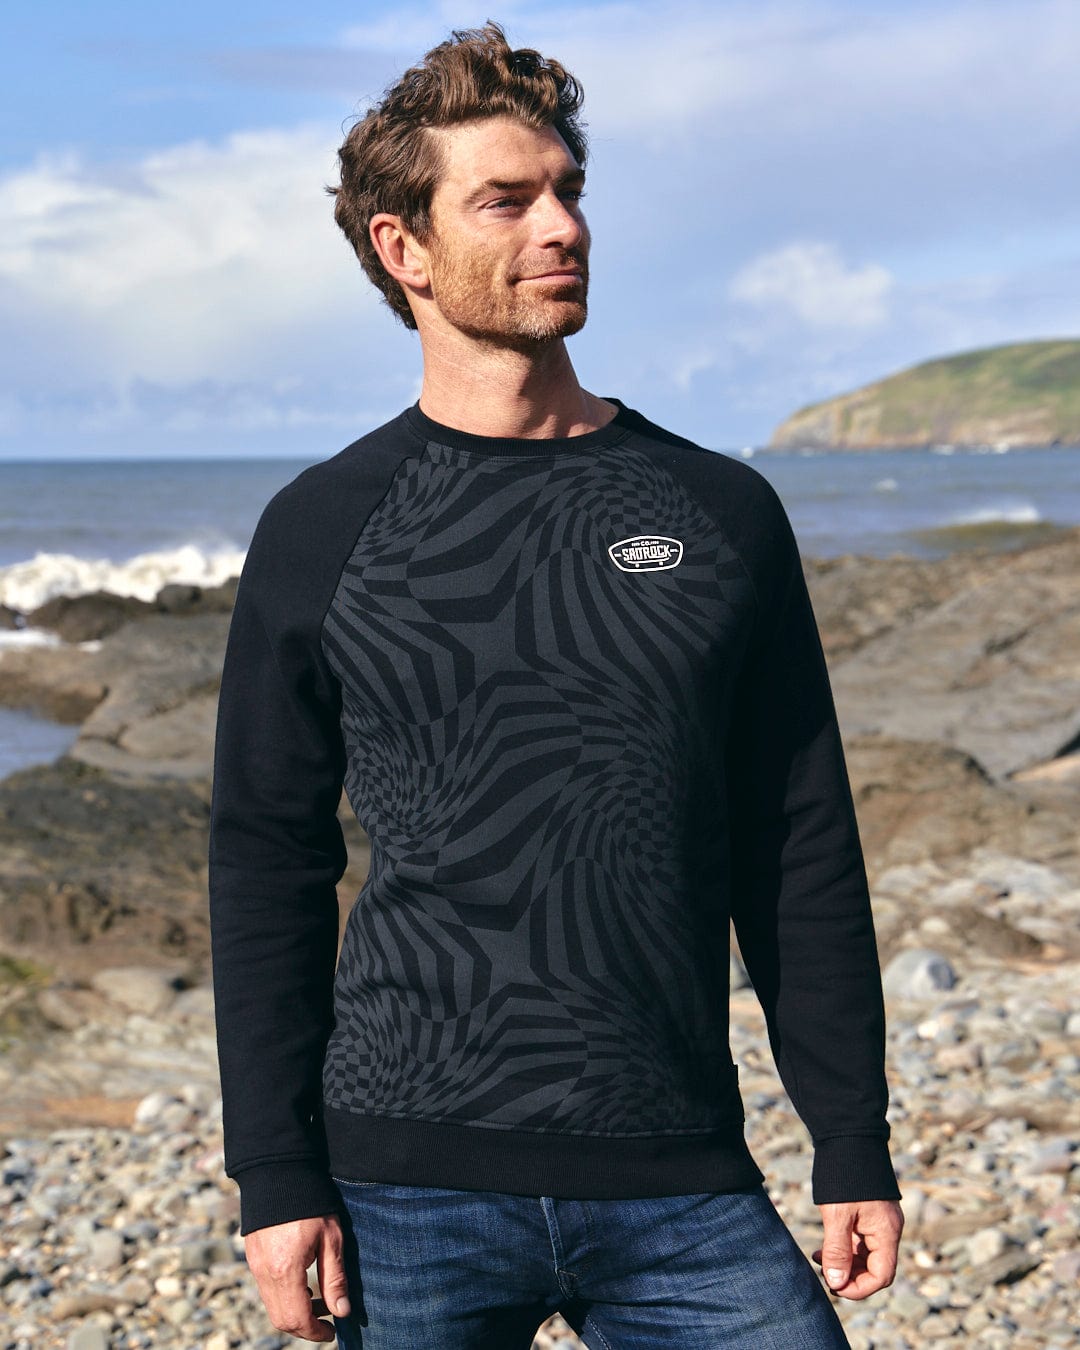 A man is standing on a beach wearing a black Saltrock sweatshirt featuring the Grip It logo.